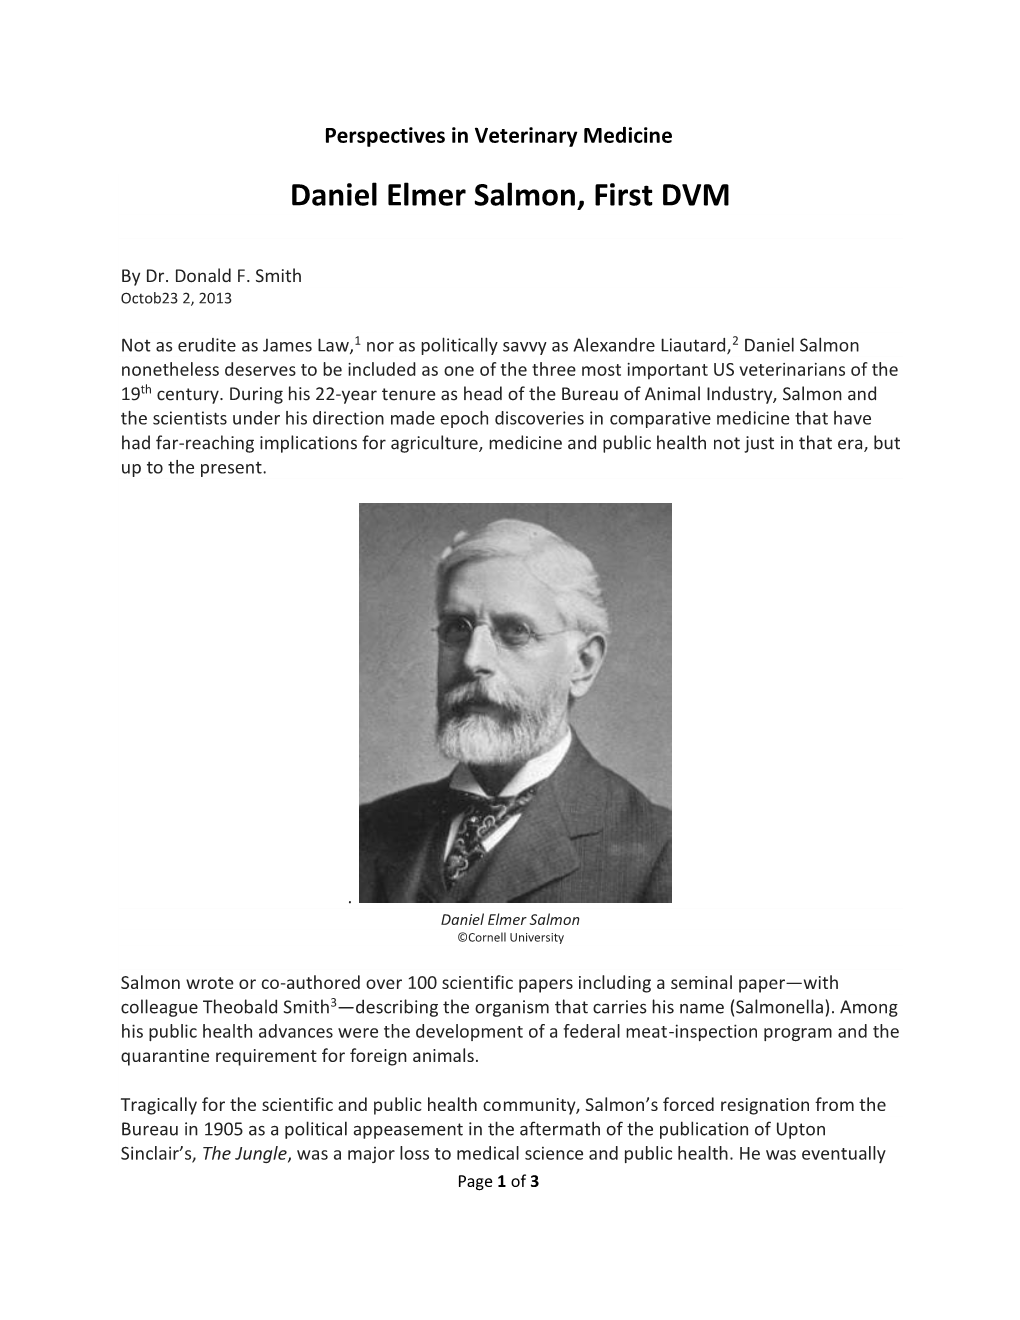 Daniel Elmer Salmon, First DVM